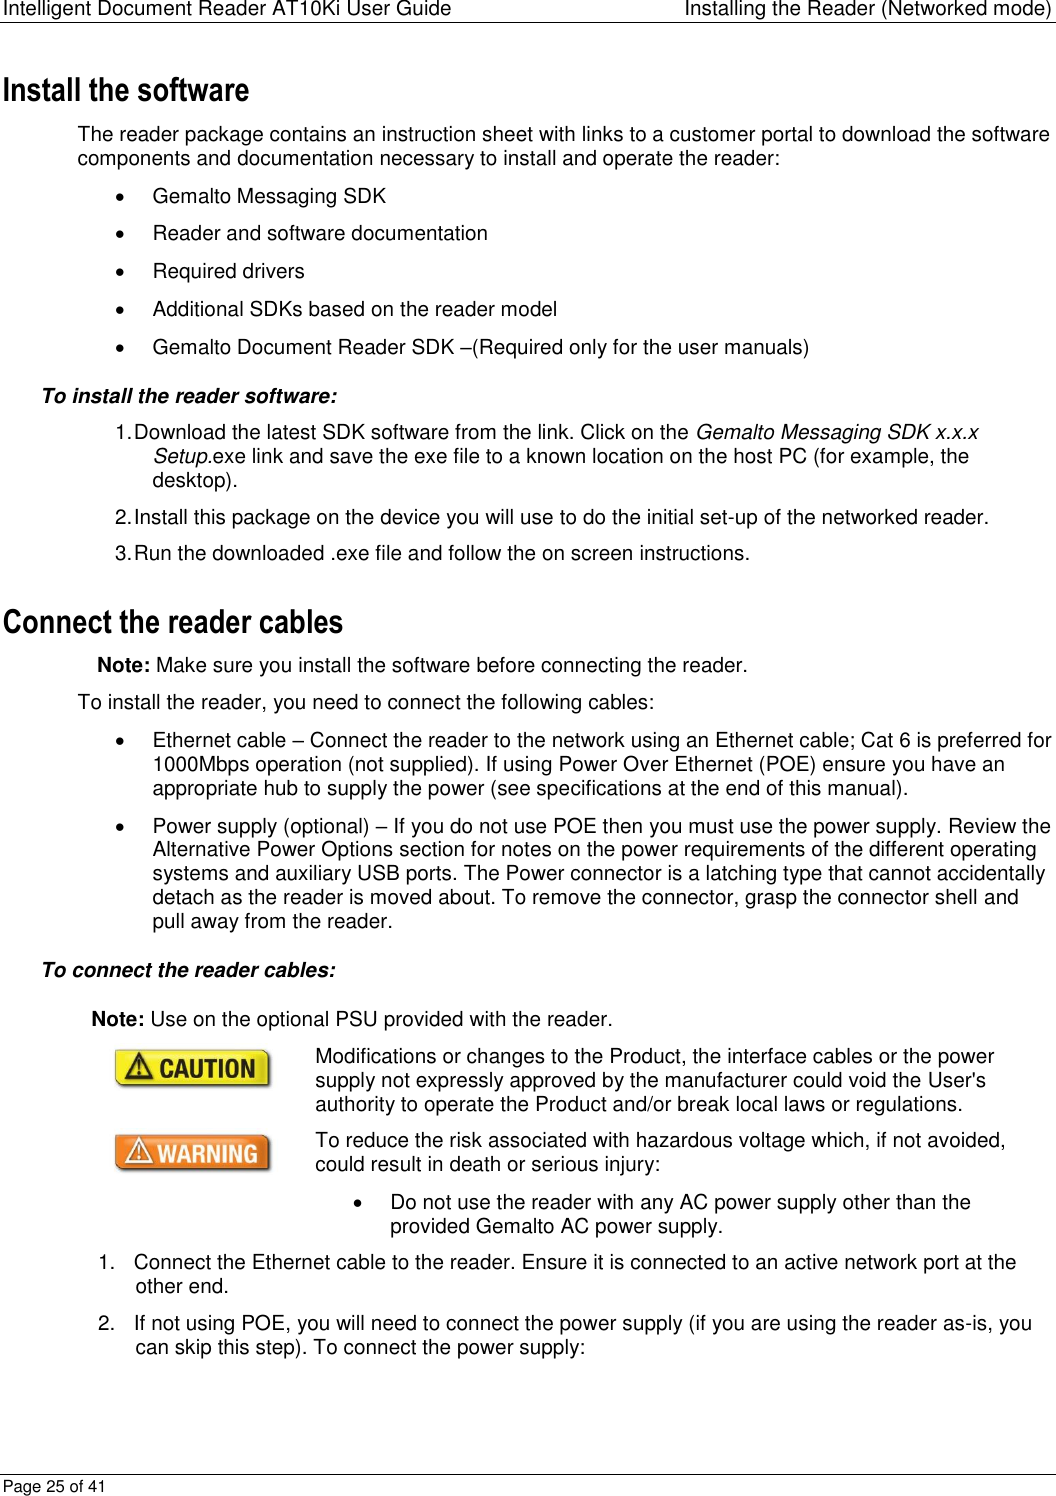 Page 25 of Gemalto PR01523 ation Scanner User Manual